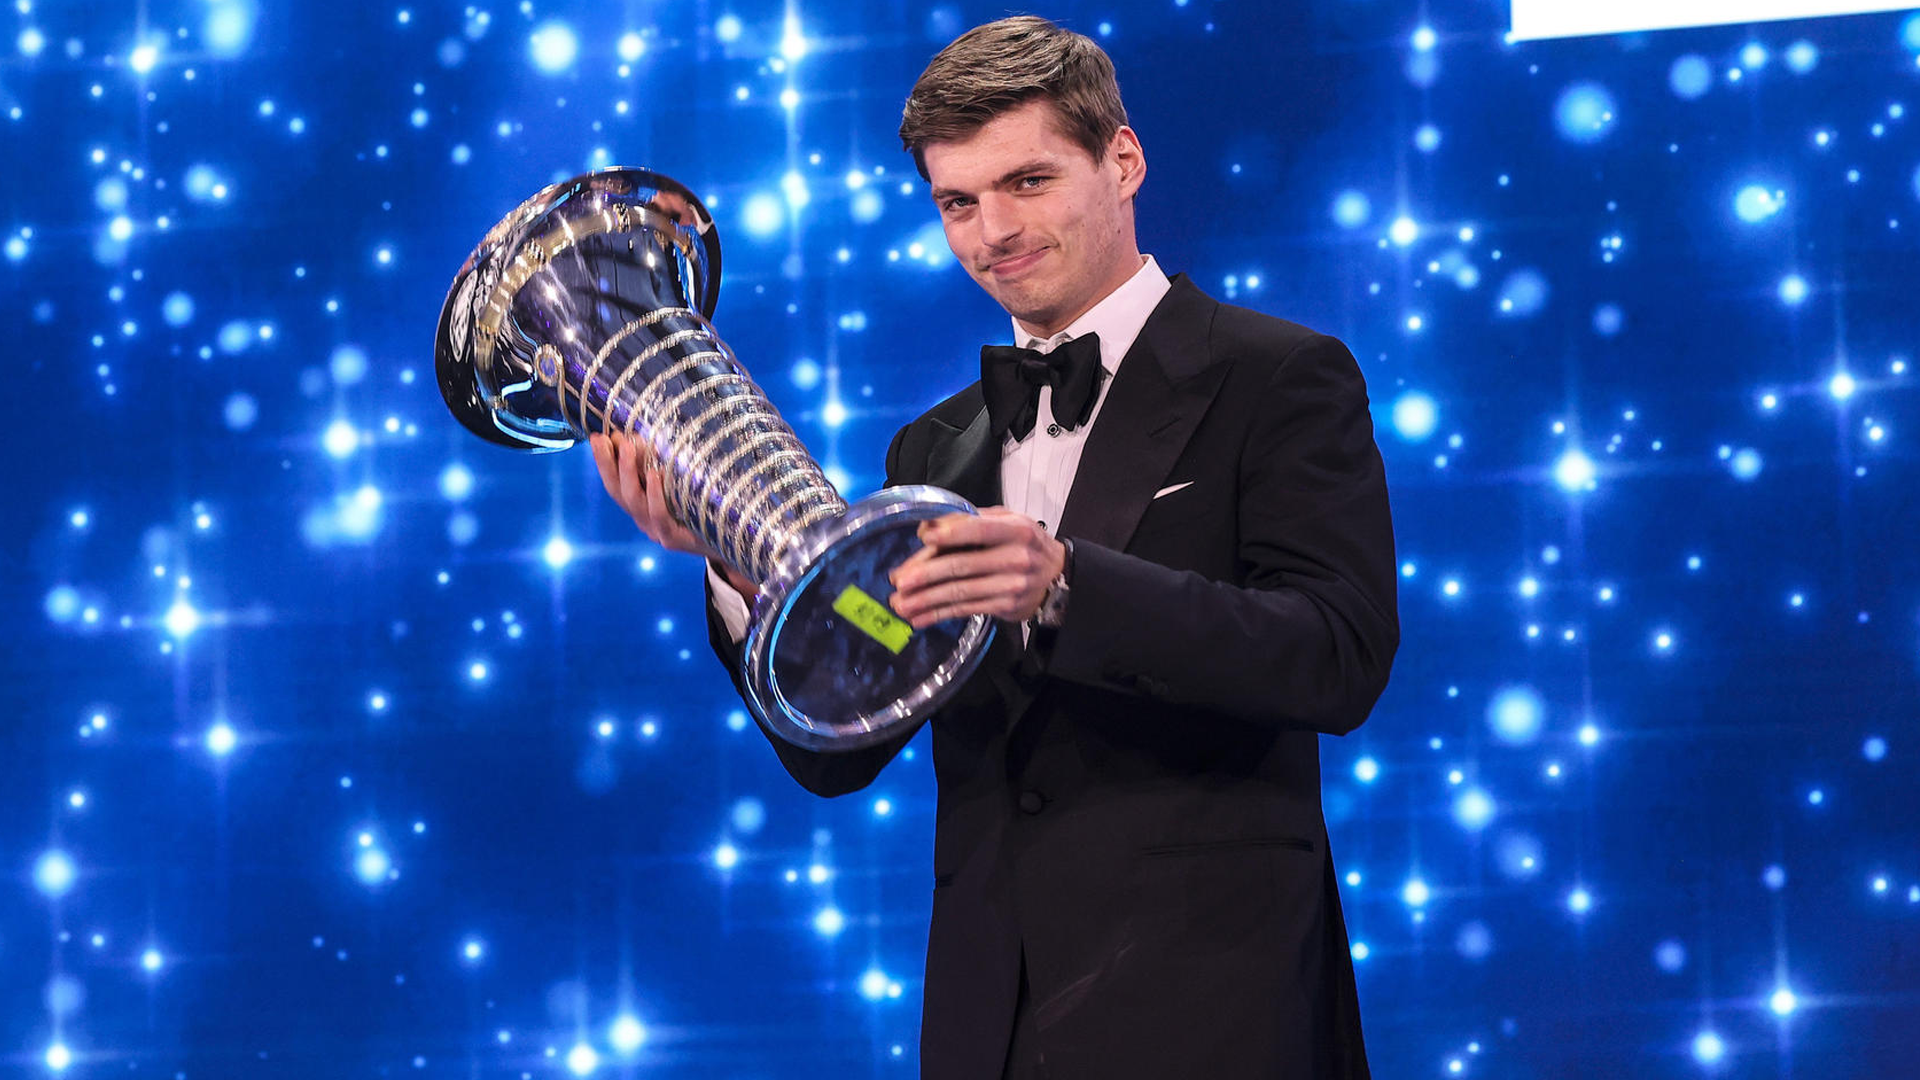 Verstappen lifts F1 Championship trophy at FIA gala